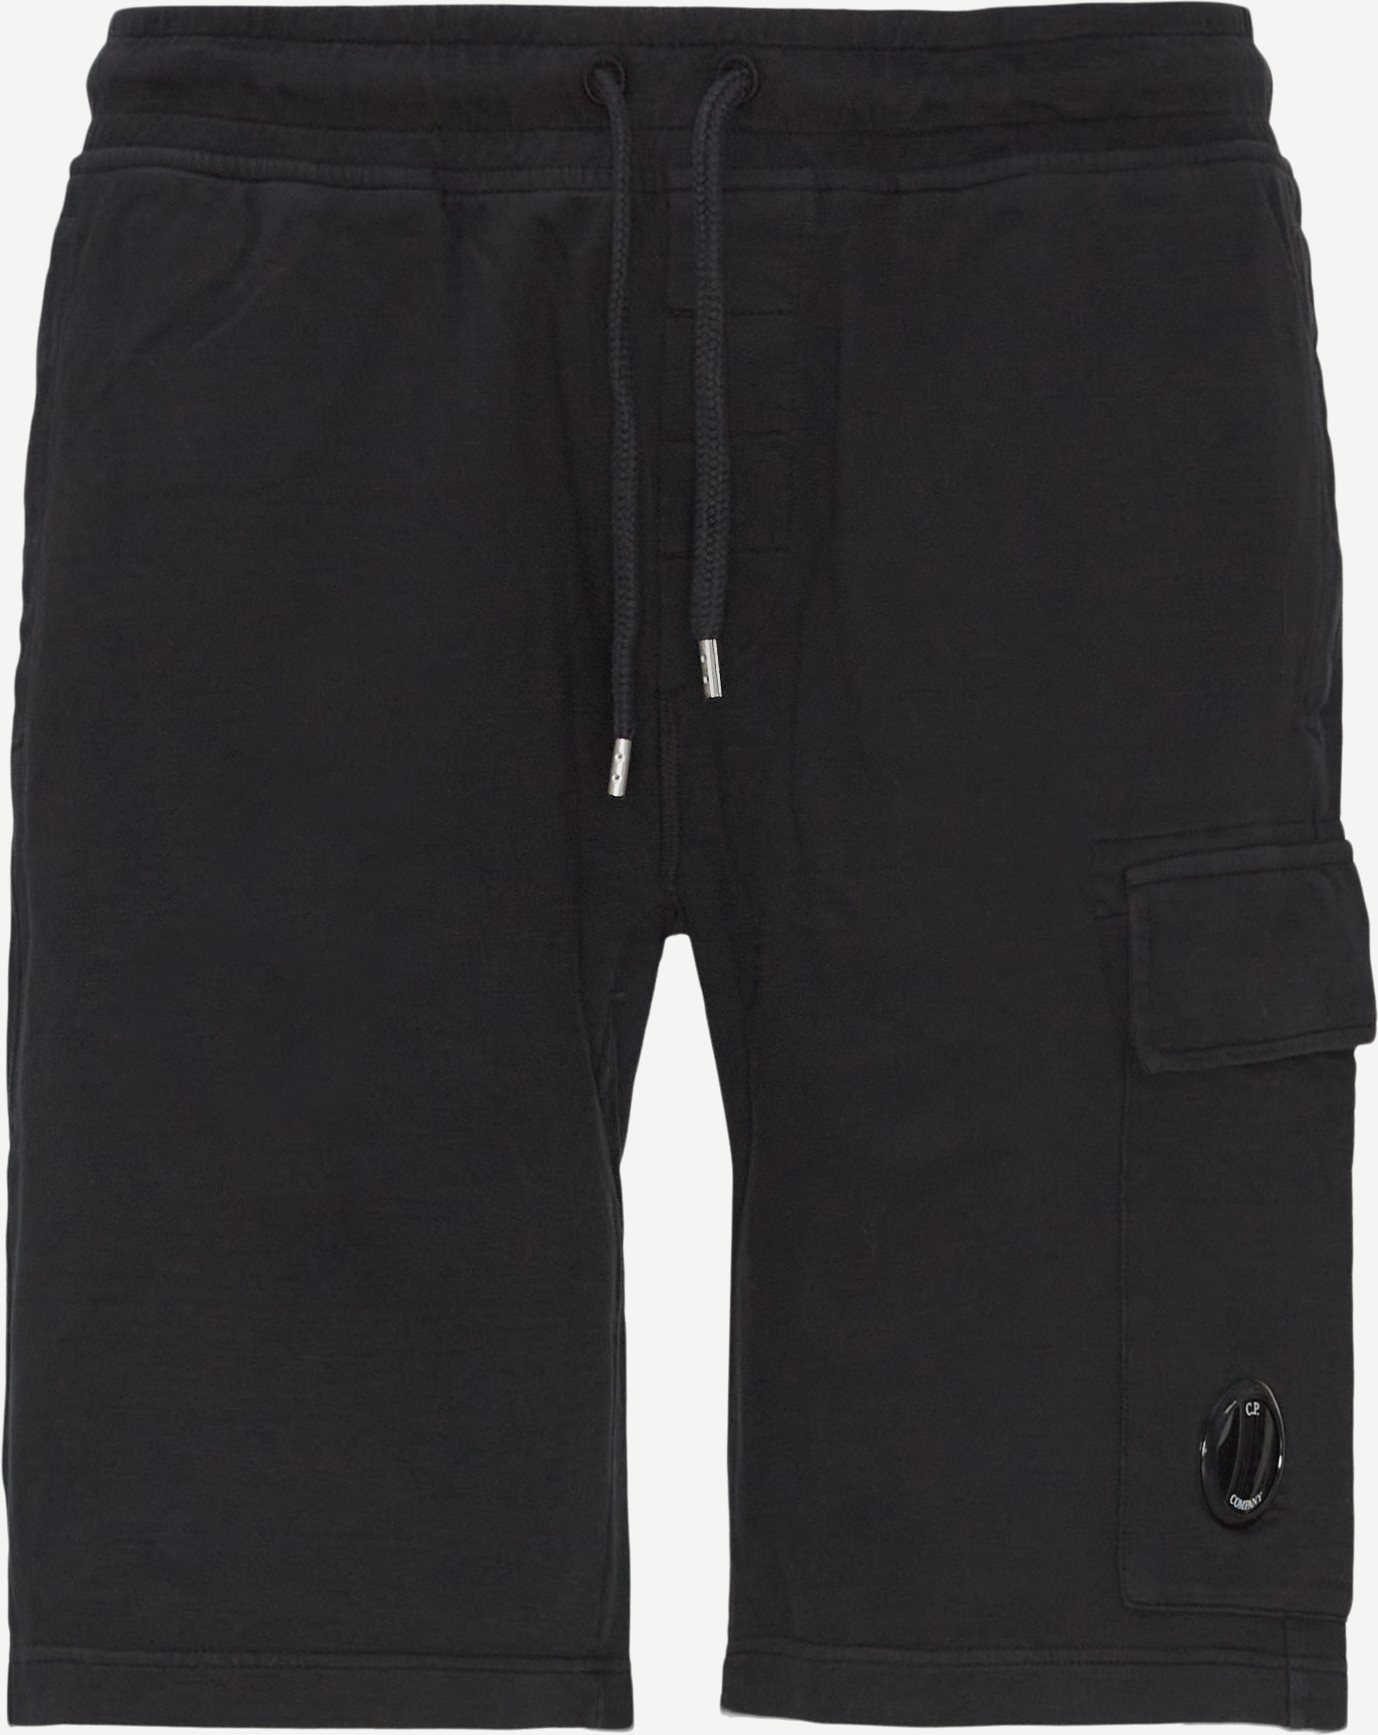 C.P. Company Shorts SB021A 2246G Black